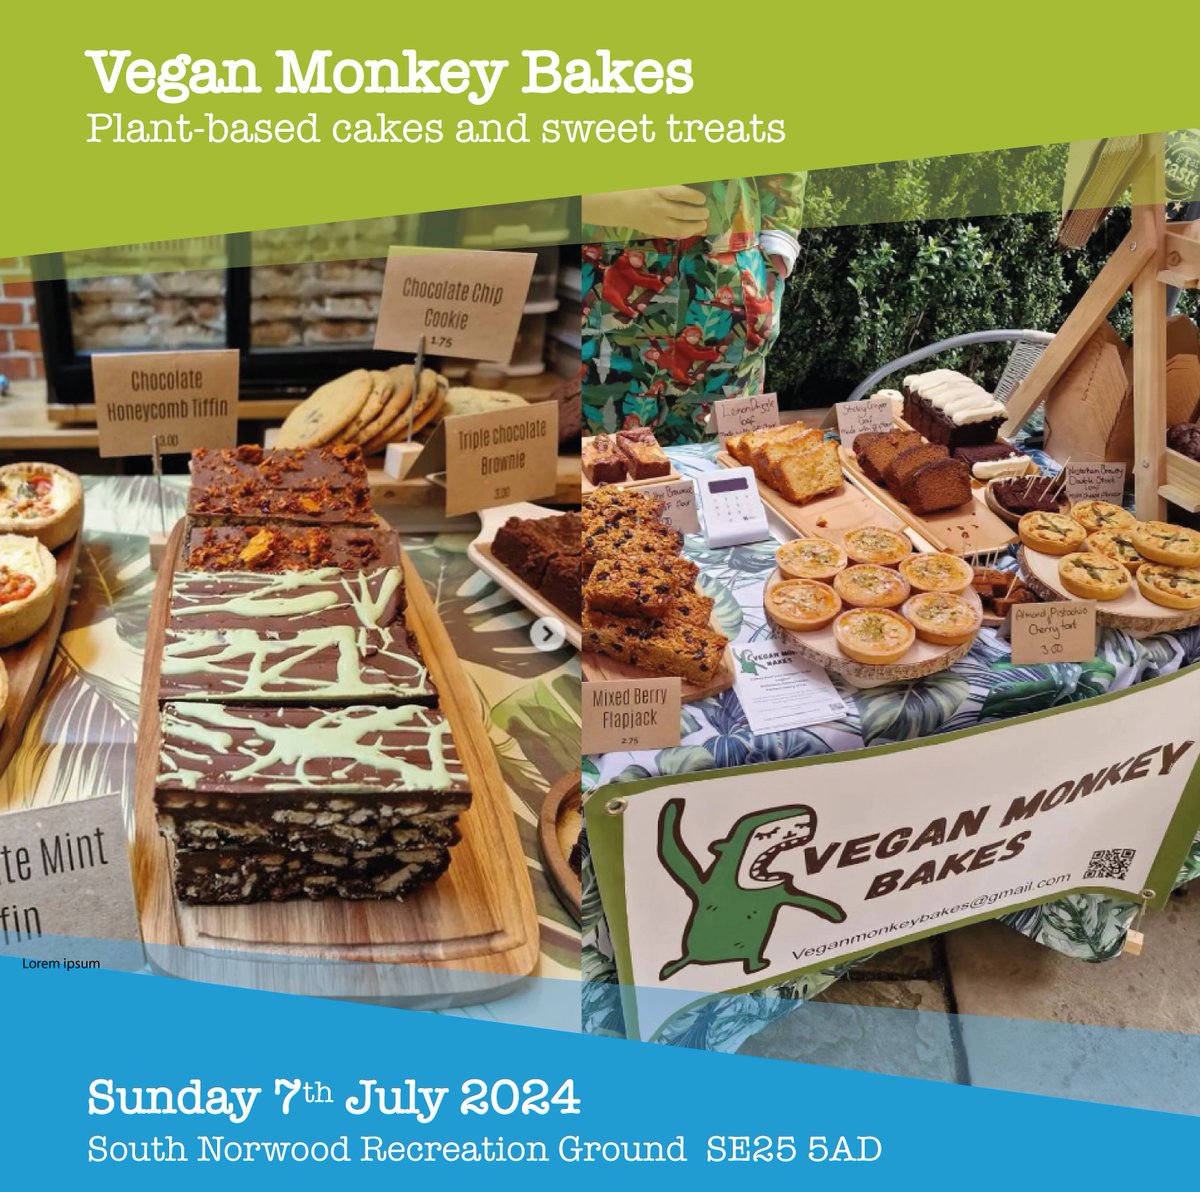 Vegan Monkey Bakes will be joining us at SNCFest2024 with their amazing sweet and savoury vegan treats!

#SNCFest2024 #CraftsFestival #ArtsFestival #MusicFestival #SE25 #SouthNorwood #Croydon #CroydonFestival #FestivalCroydon #ThisIsCroydon #FestivalLondon #LondonFestival